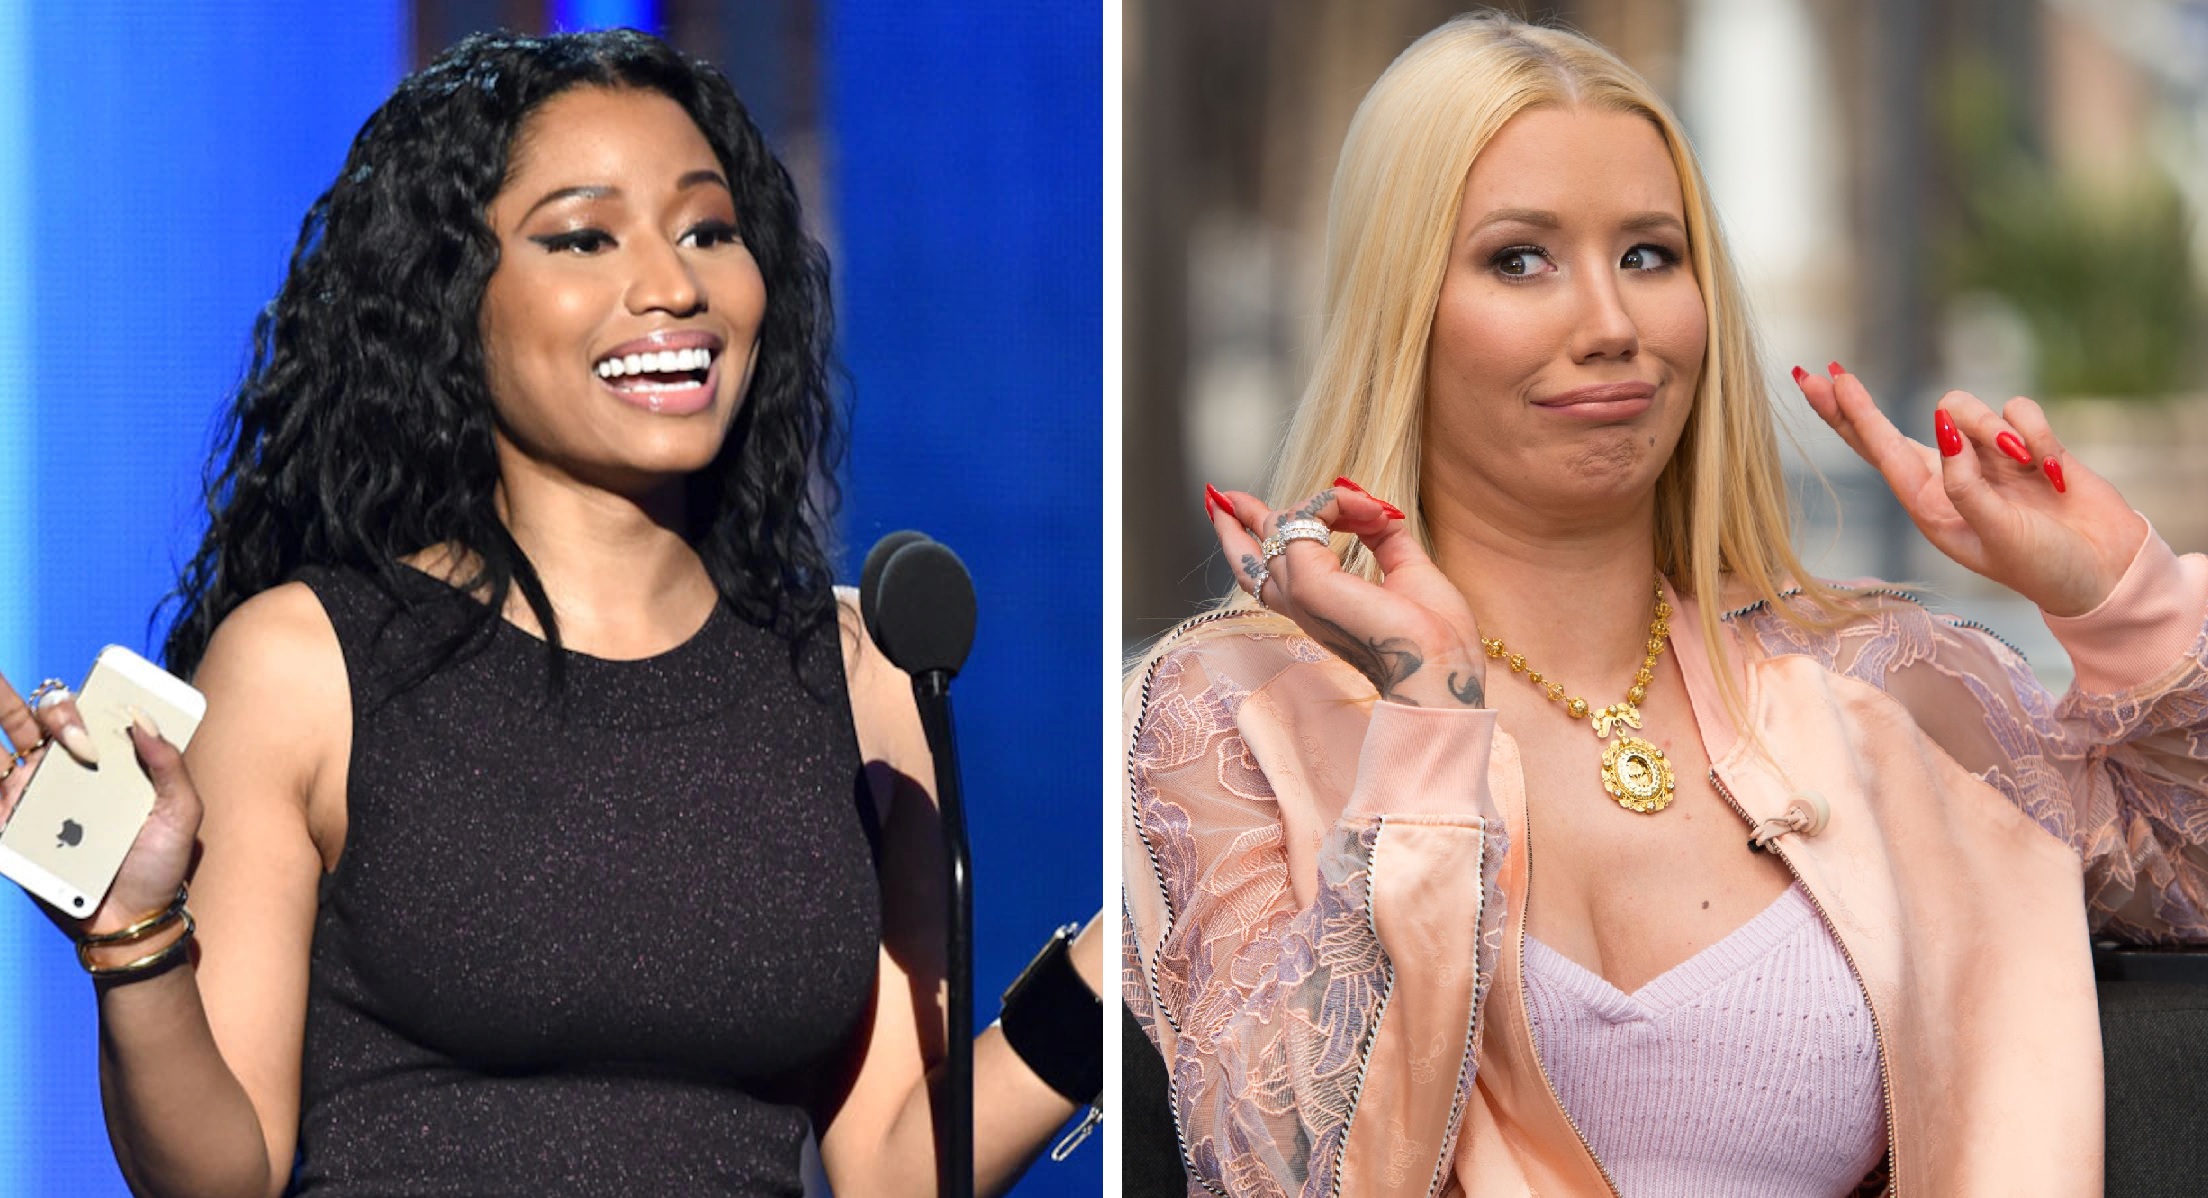 Iggy Azalea Showers Praises On Nicki Minaj’s NEW Song ‘Super Freaky Girl’, Here’s What She Said…